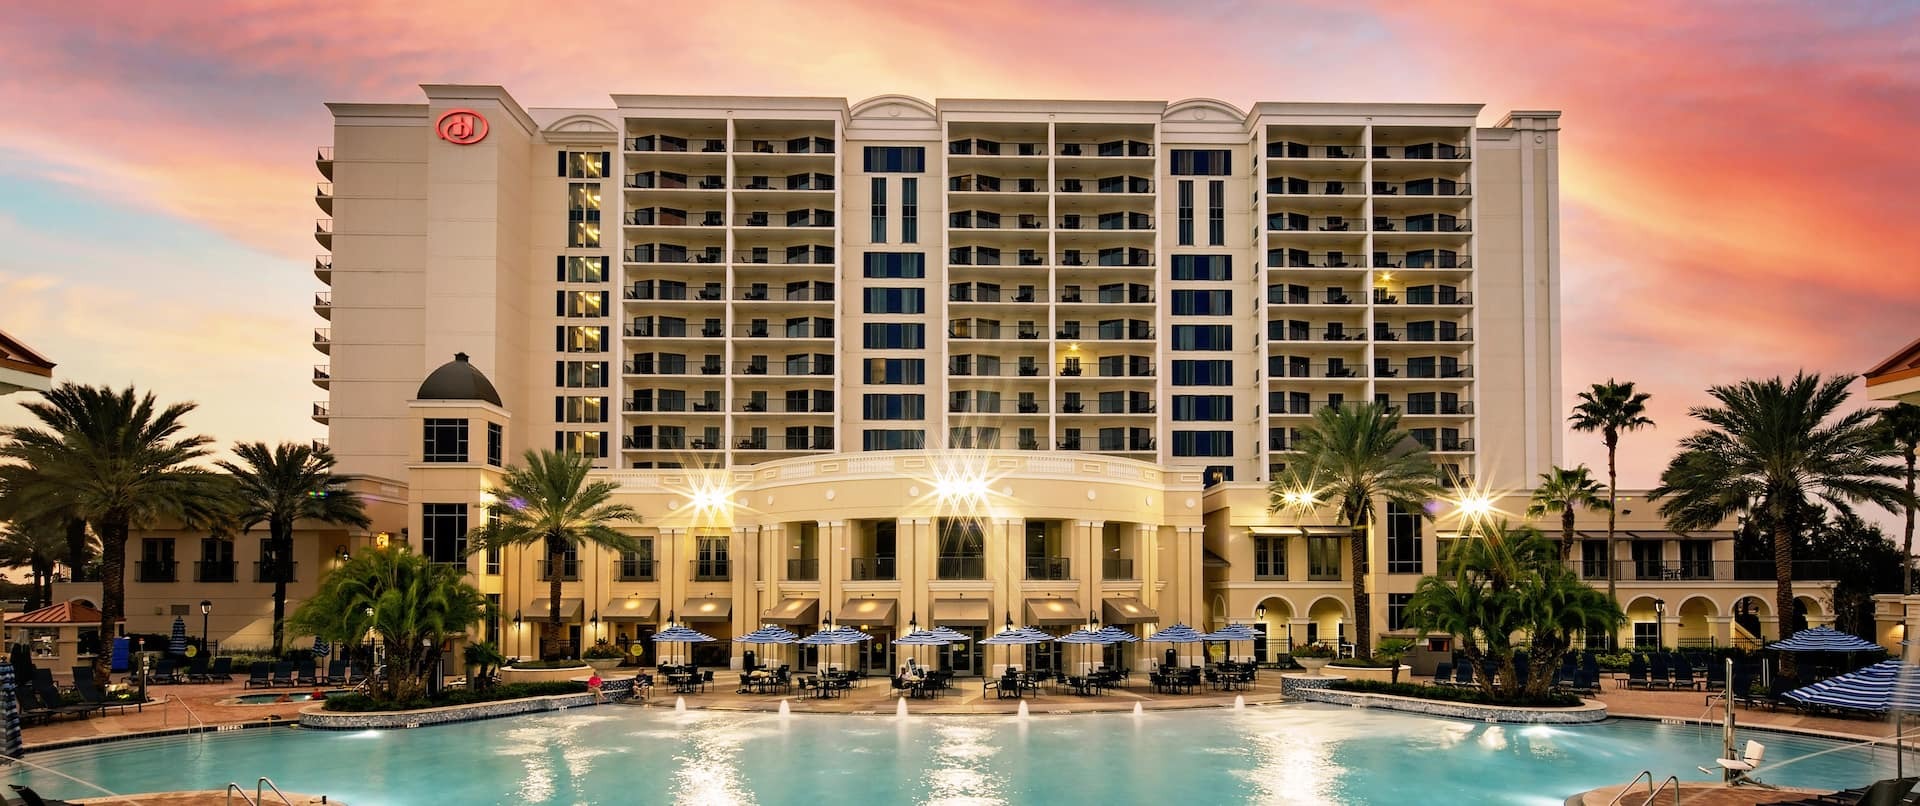 Photo of Hilton Grand Vacations Parc Soleil - Sales & Marketing, Orlando, FL